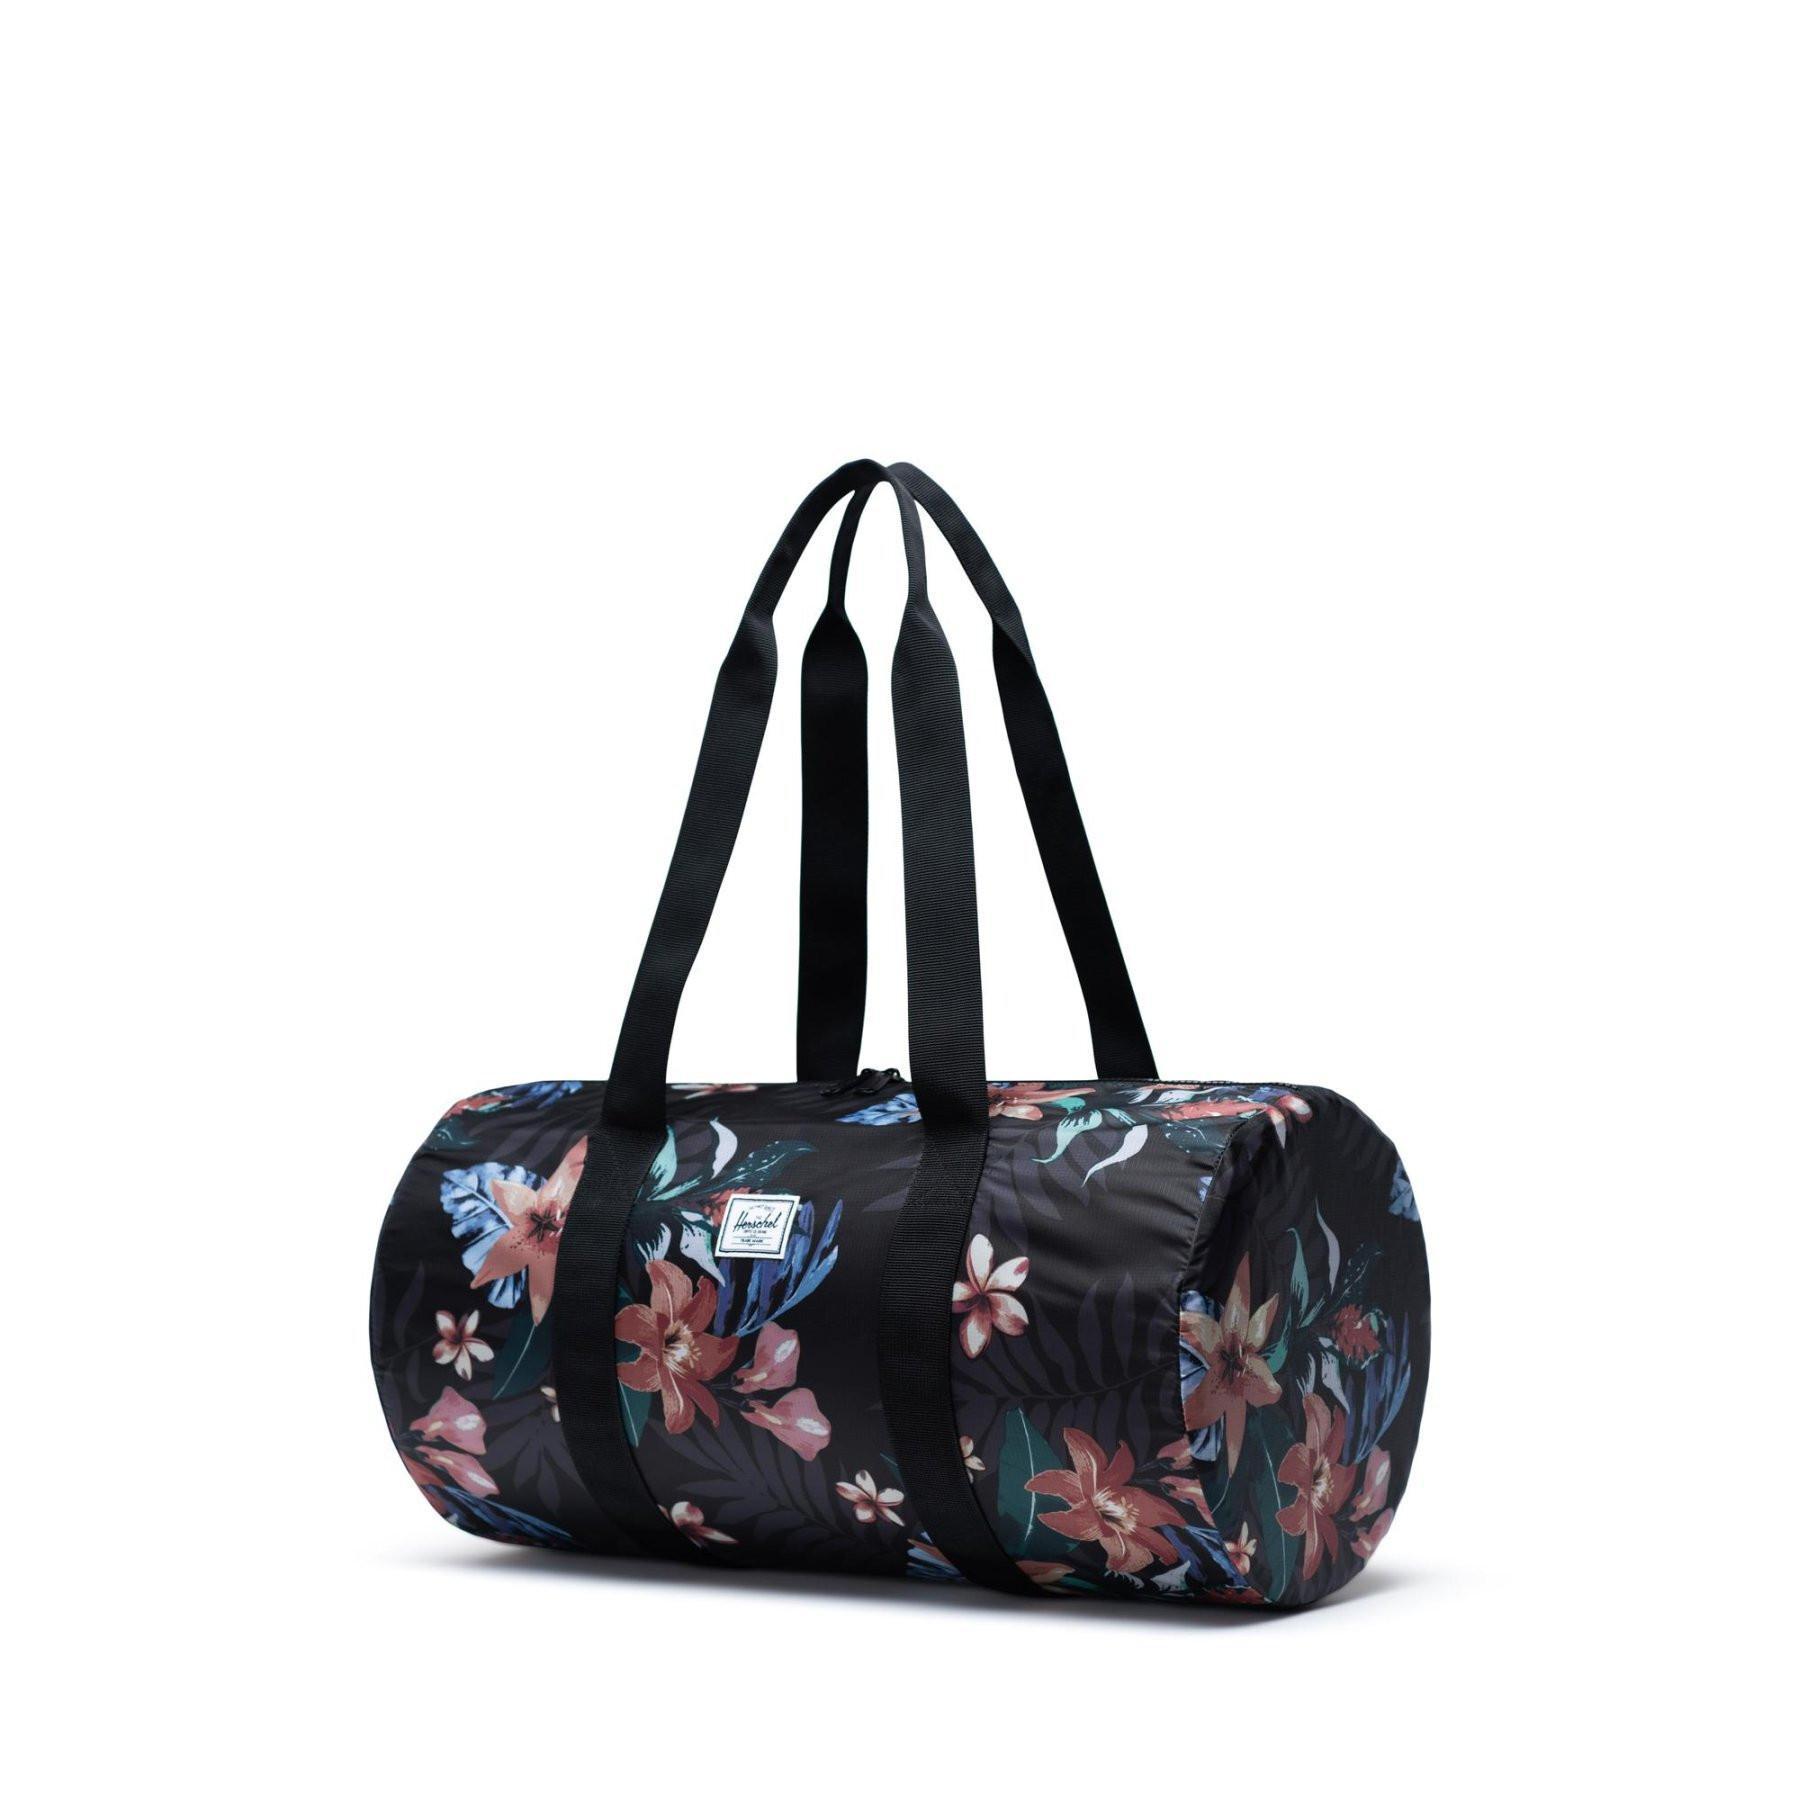 Torba podróżna Herschel packable duffle summer floral black